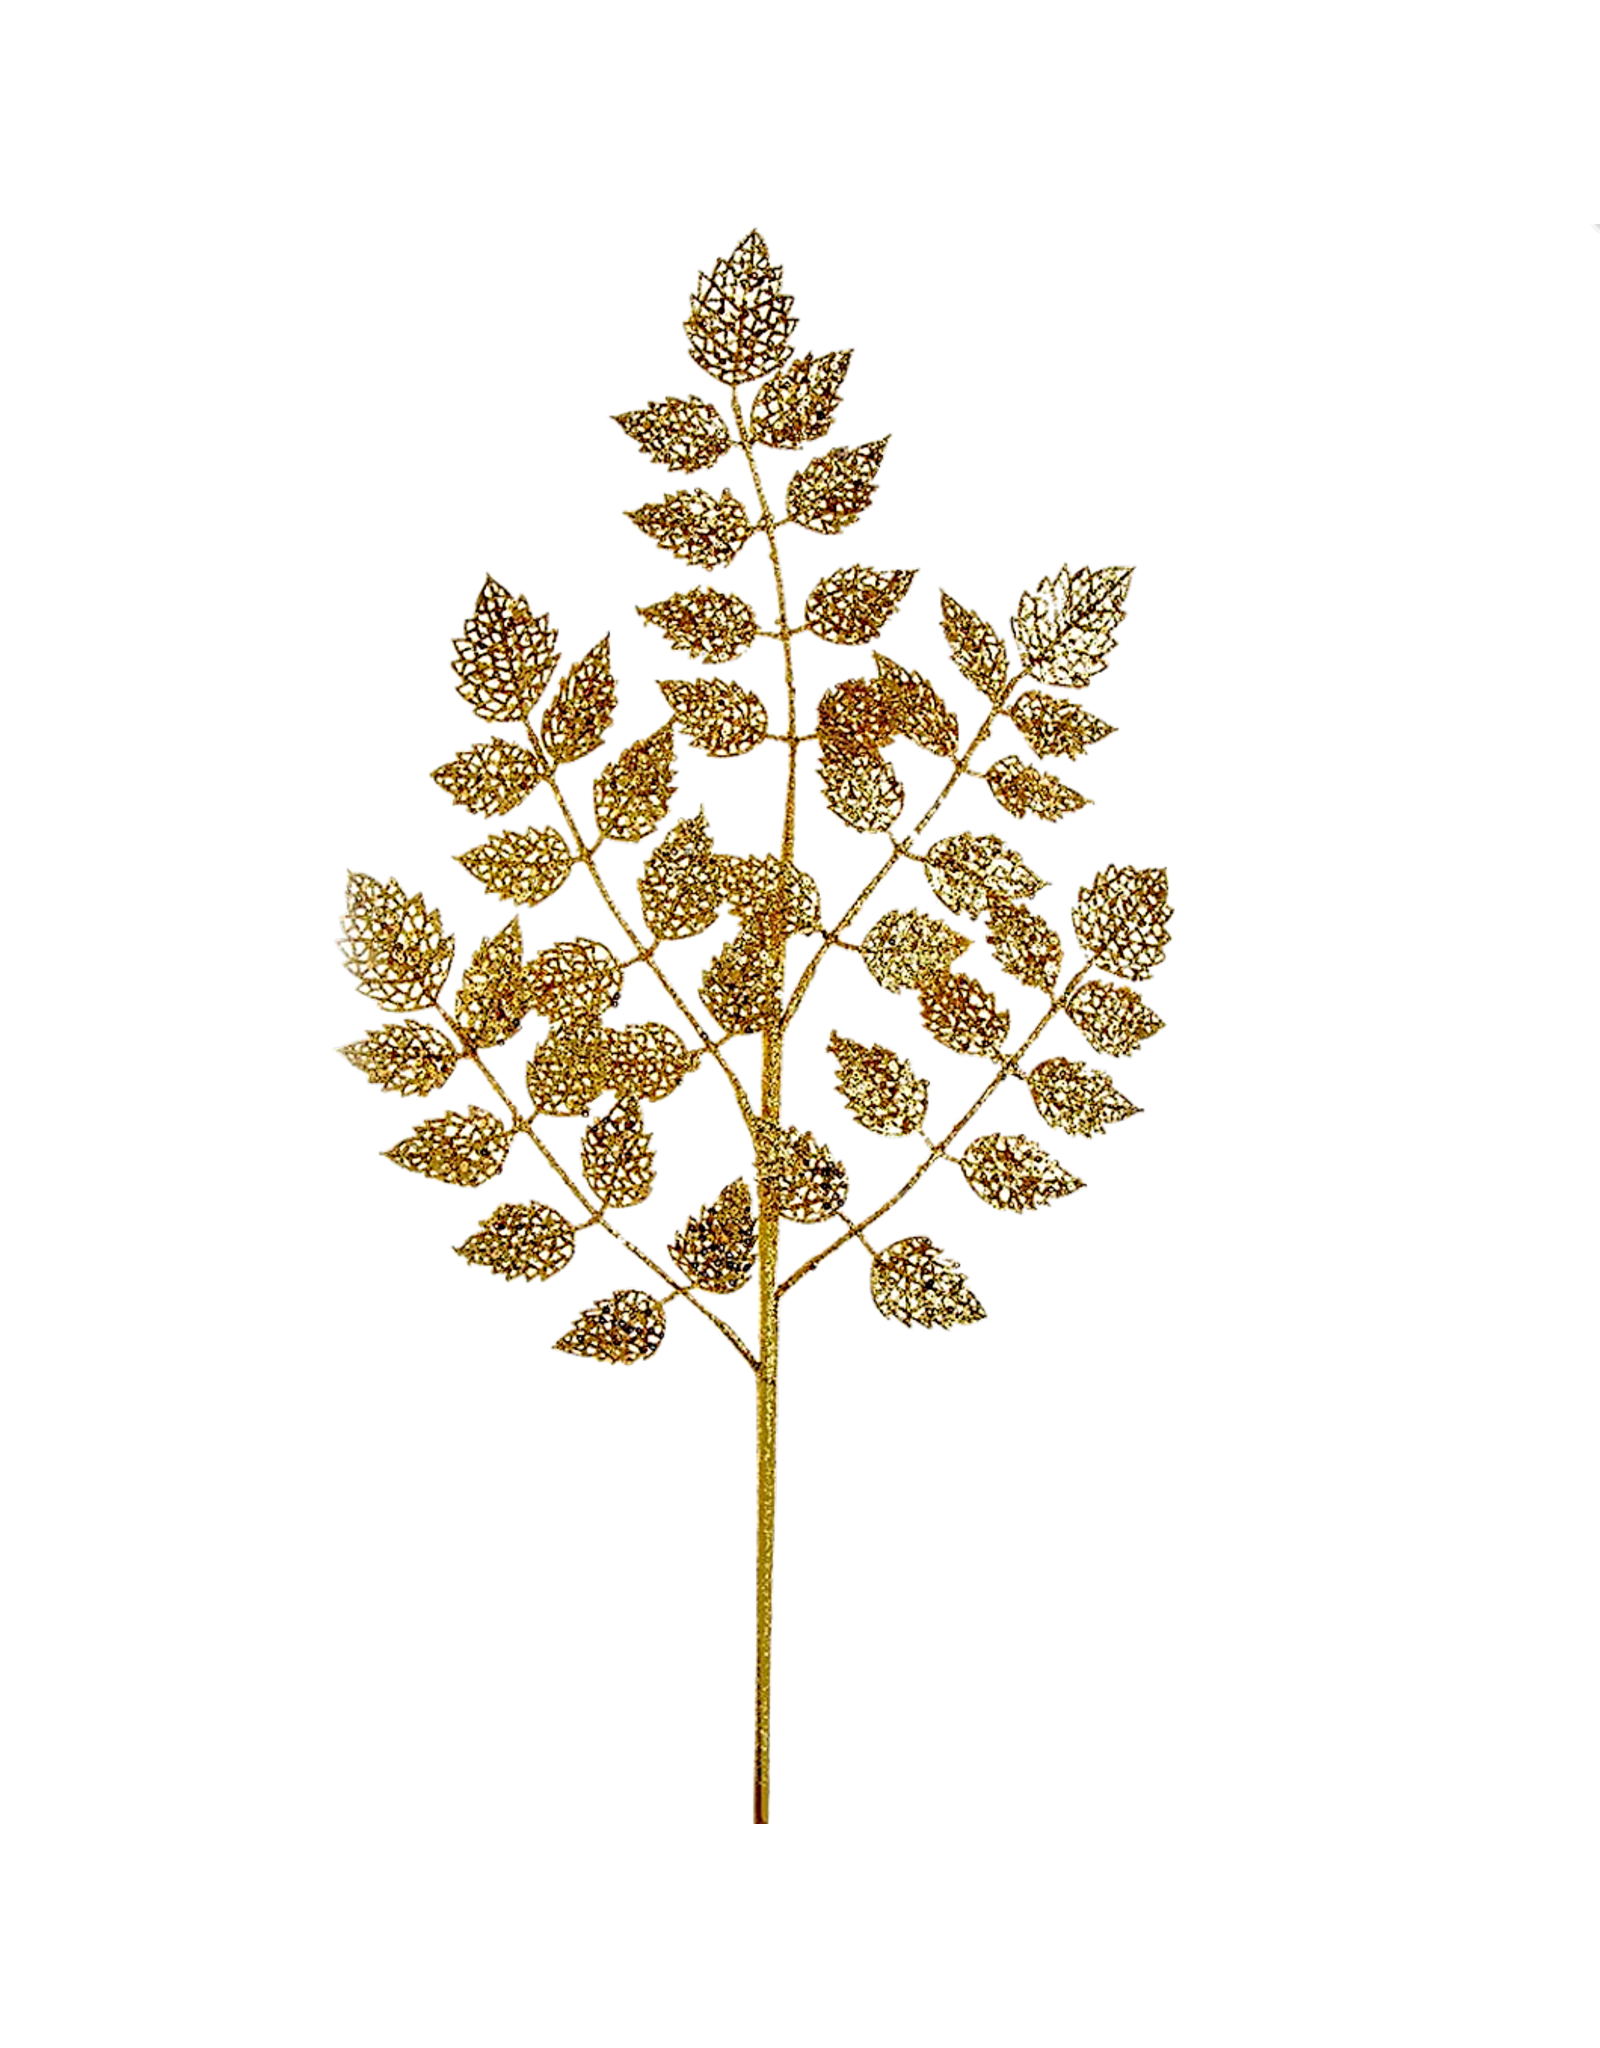 Kurt Adler Gold Glitter Leaf Spray 29.5 Inch